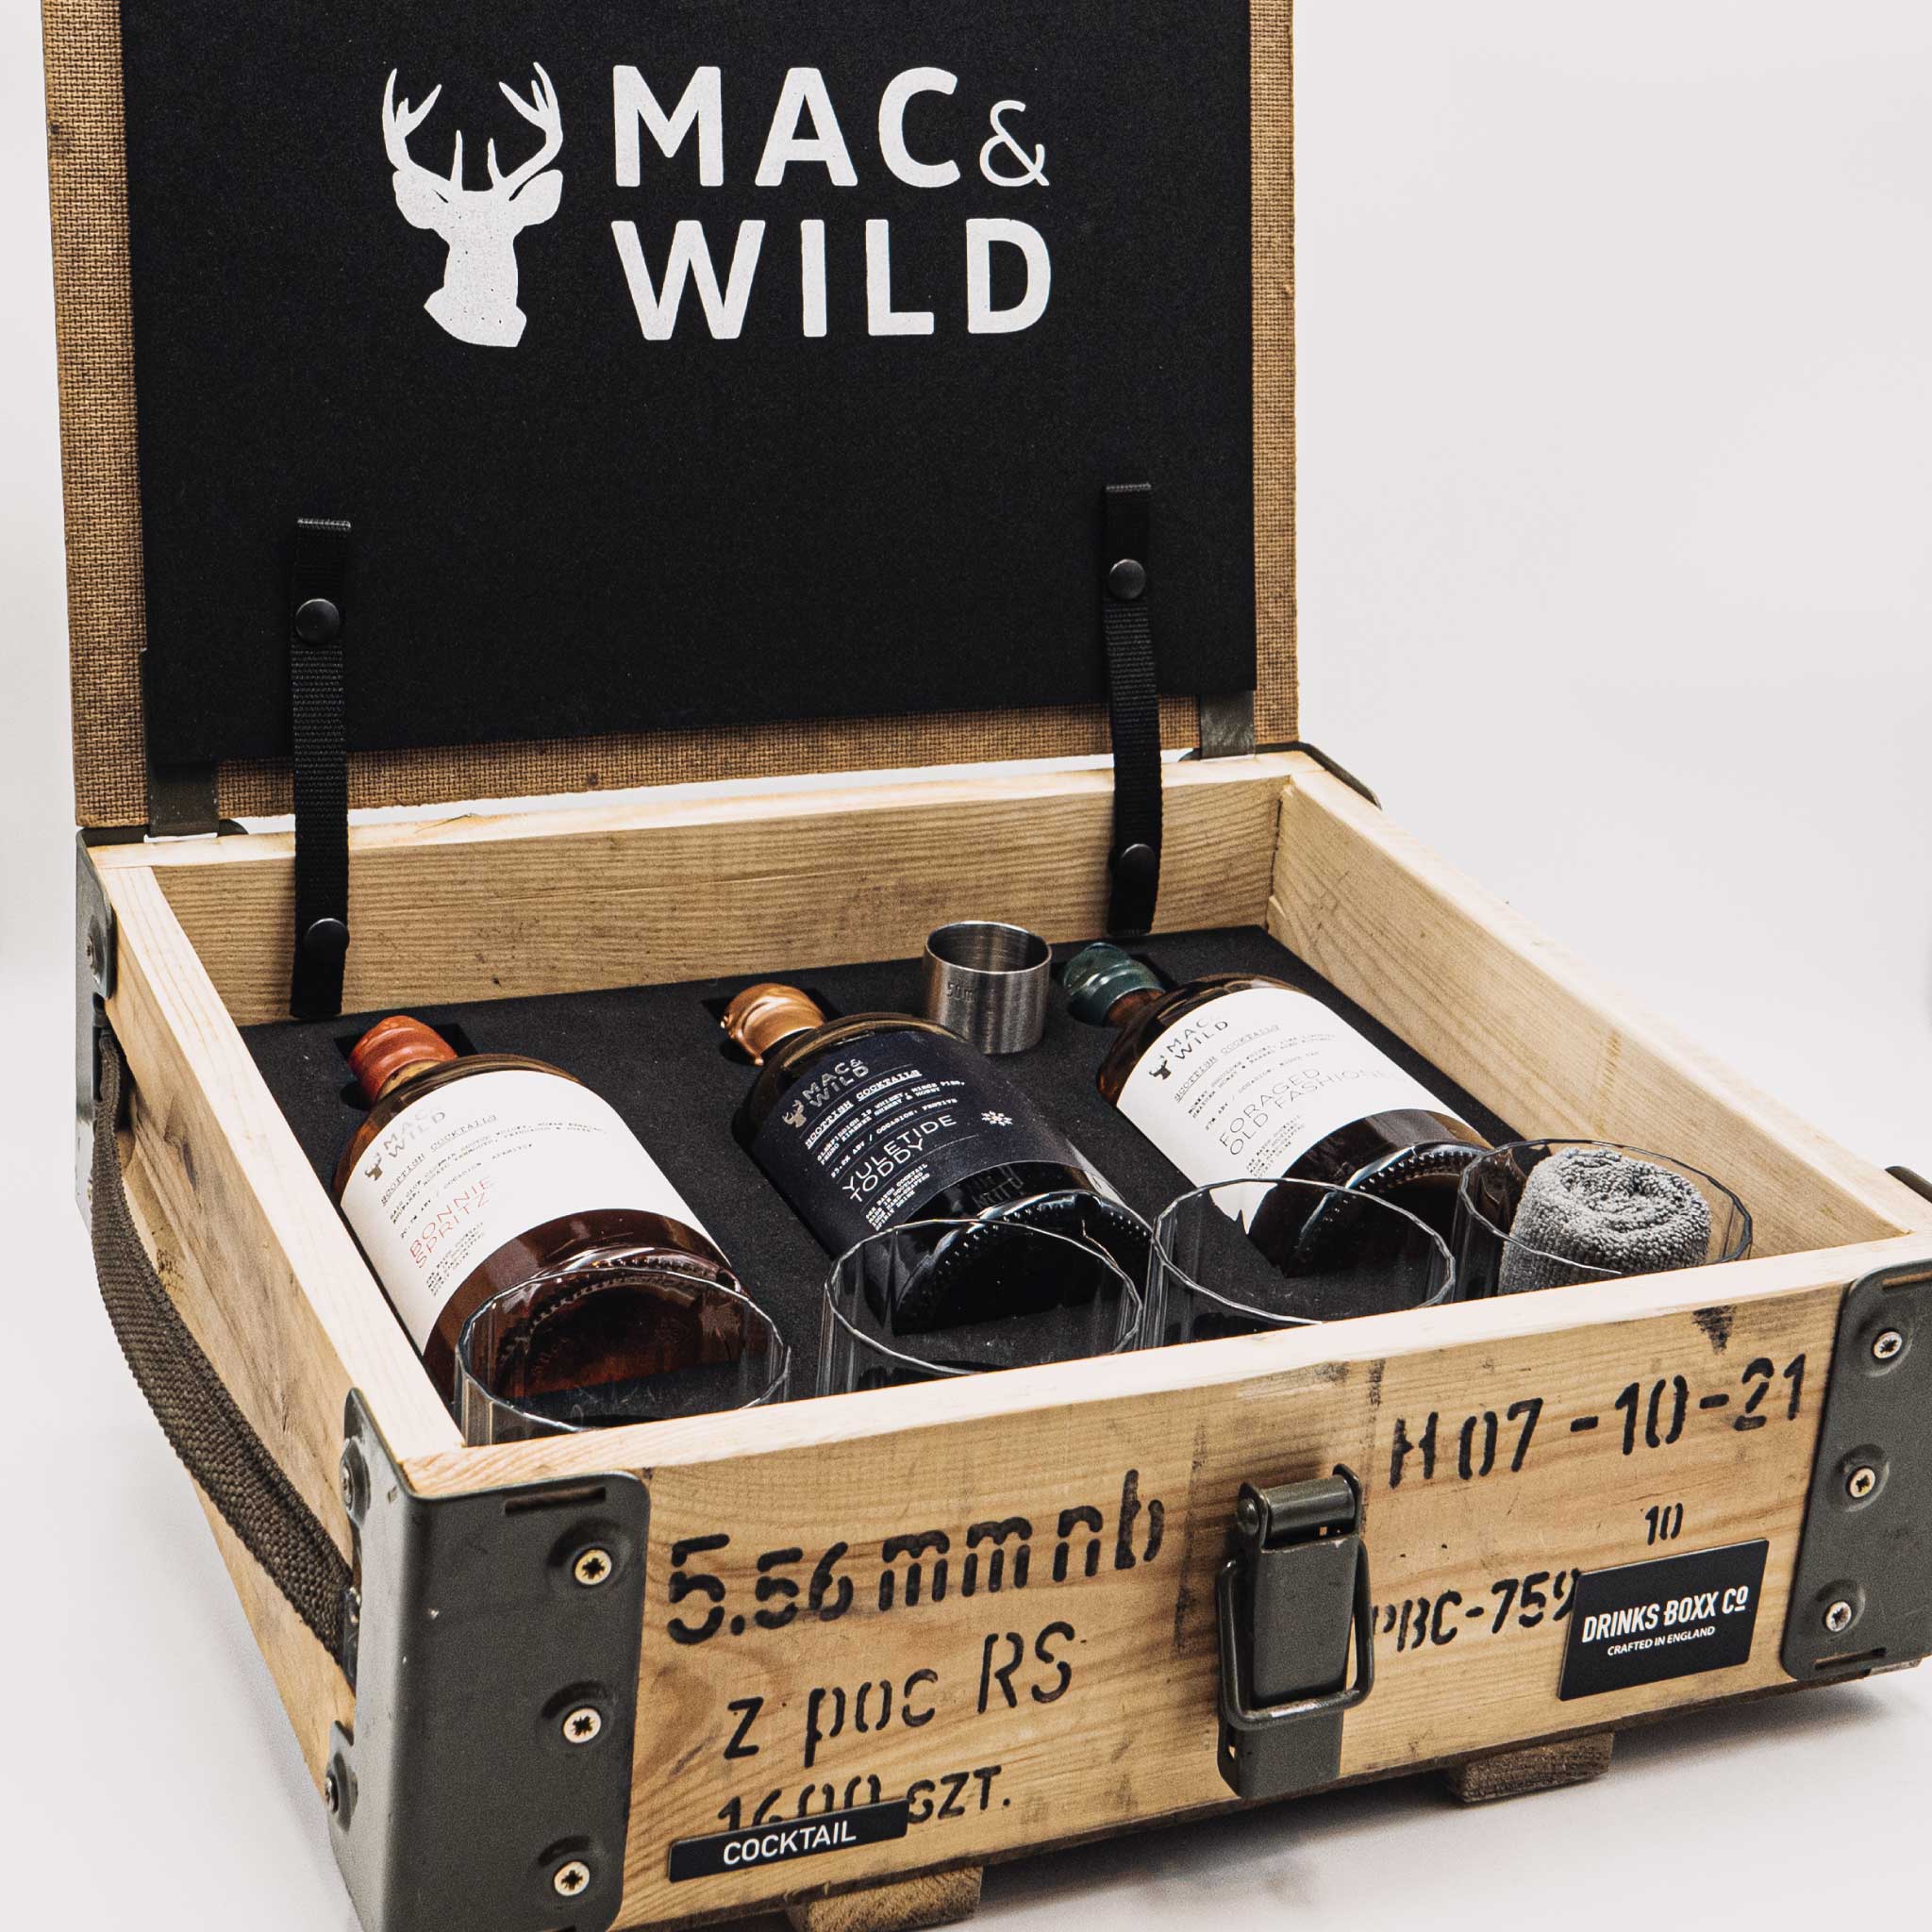 Mac & Wild Cocktail Boxx